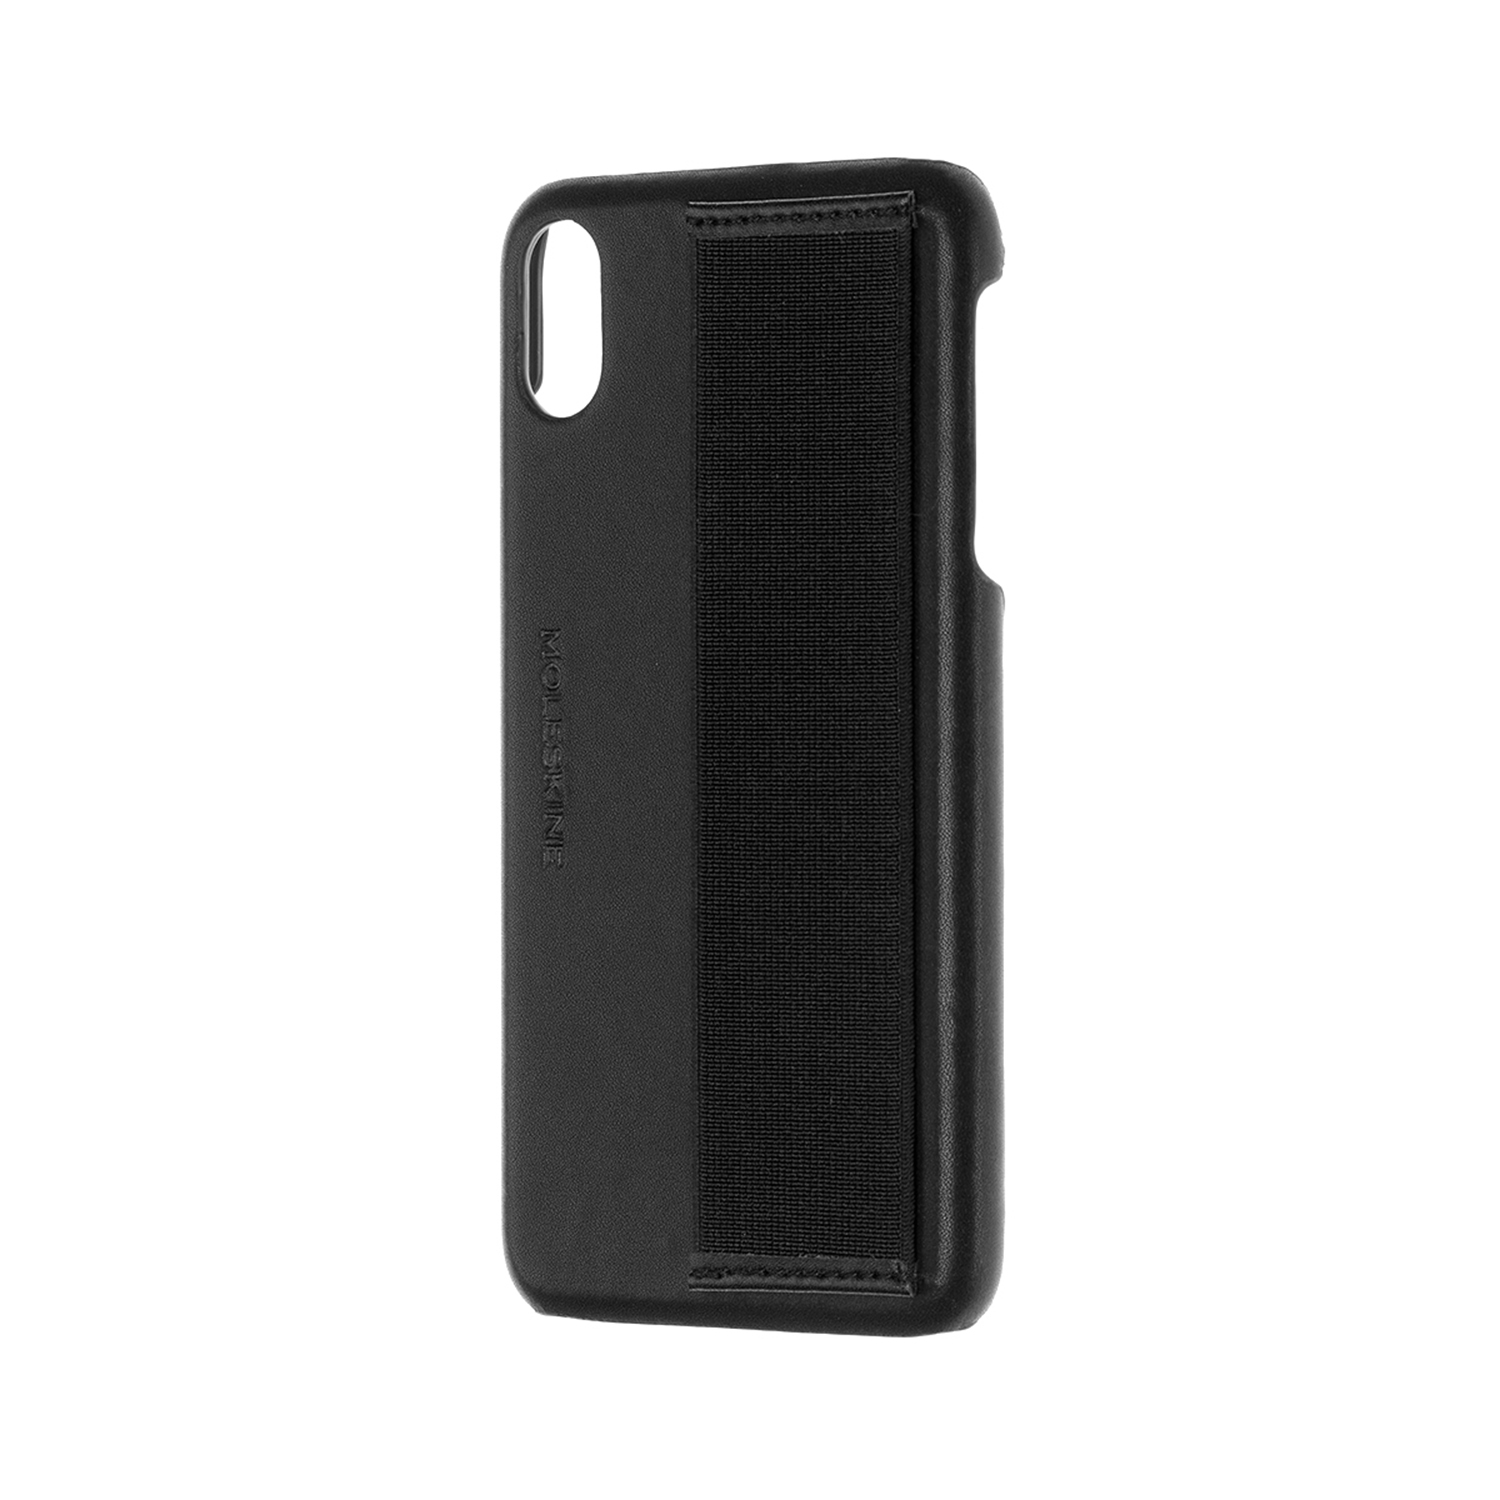 Carcasa de Iphone XS - Moleskine - Black | Moleskine